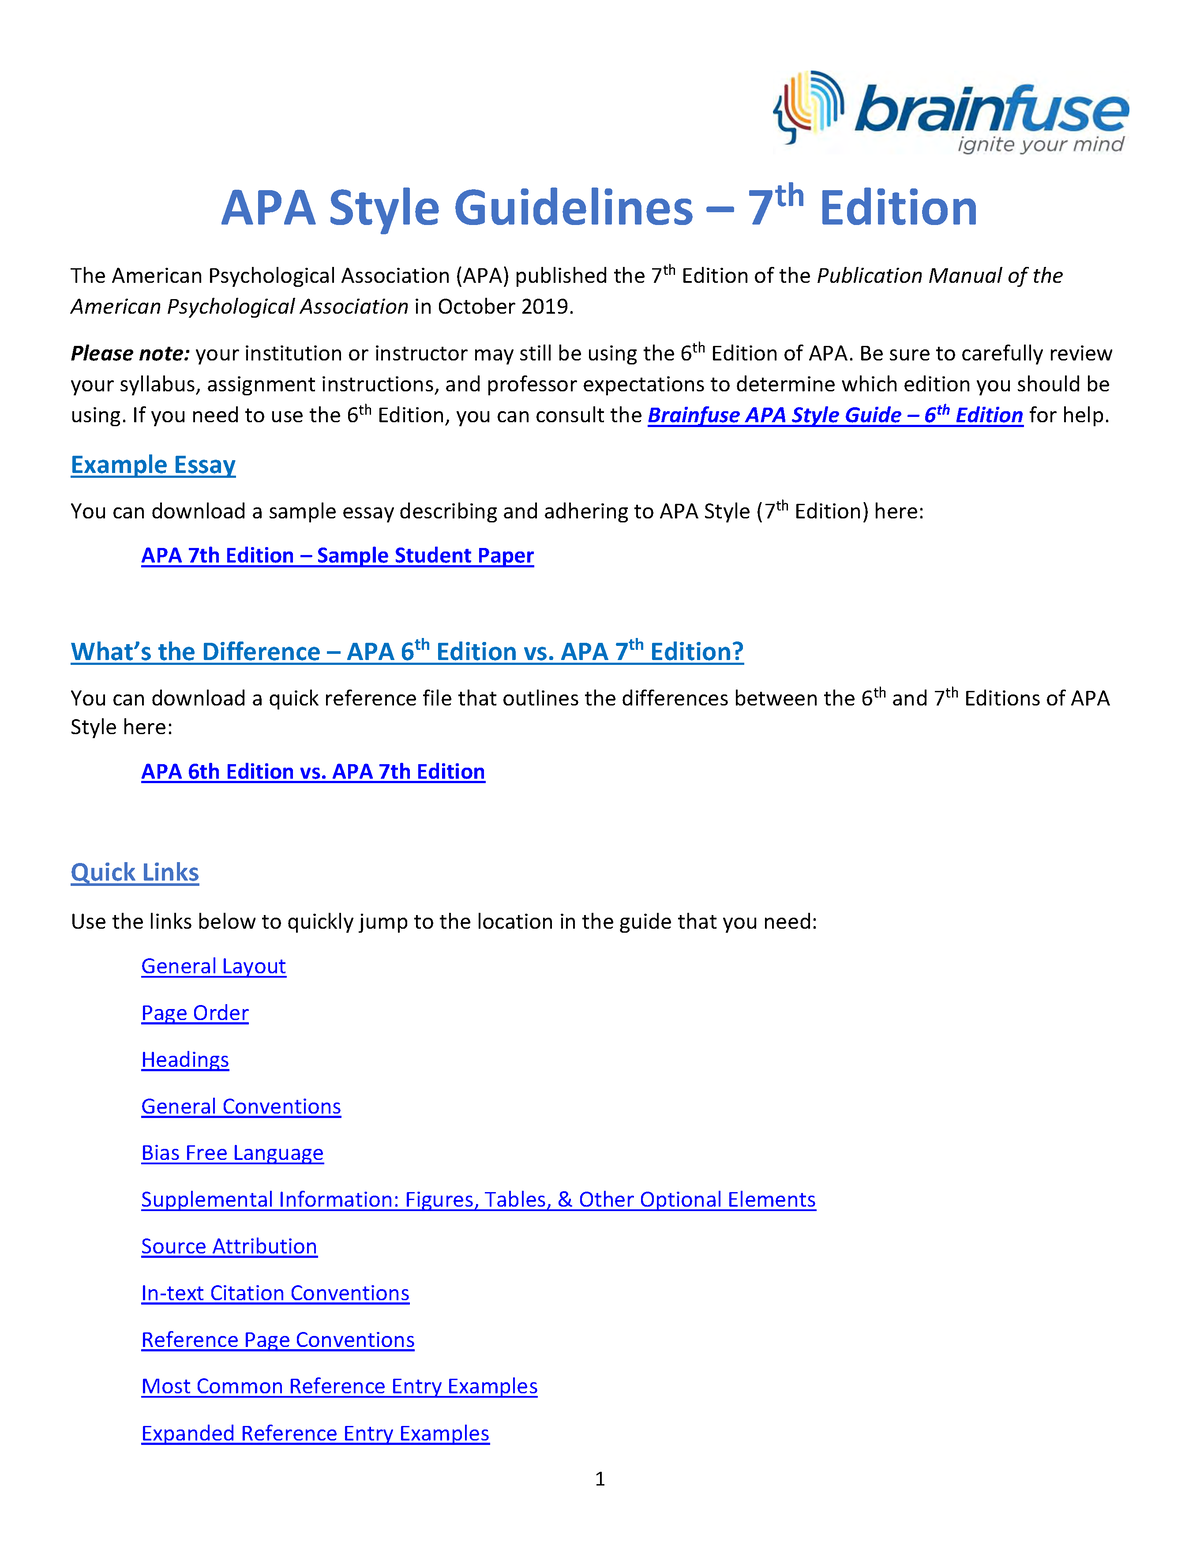 Comparison of APA Publication Manual 6th ed. vs. 7th ed